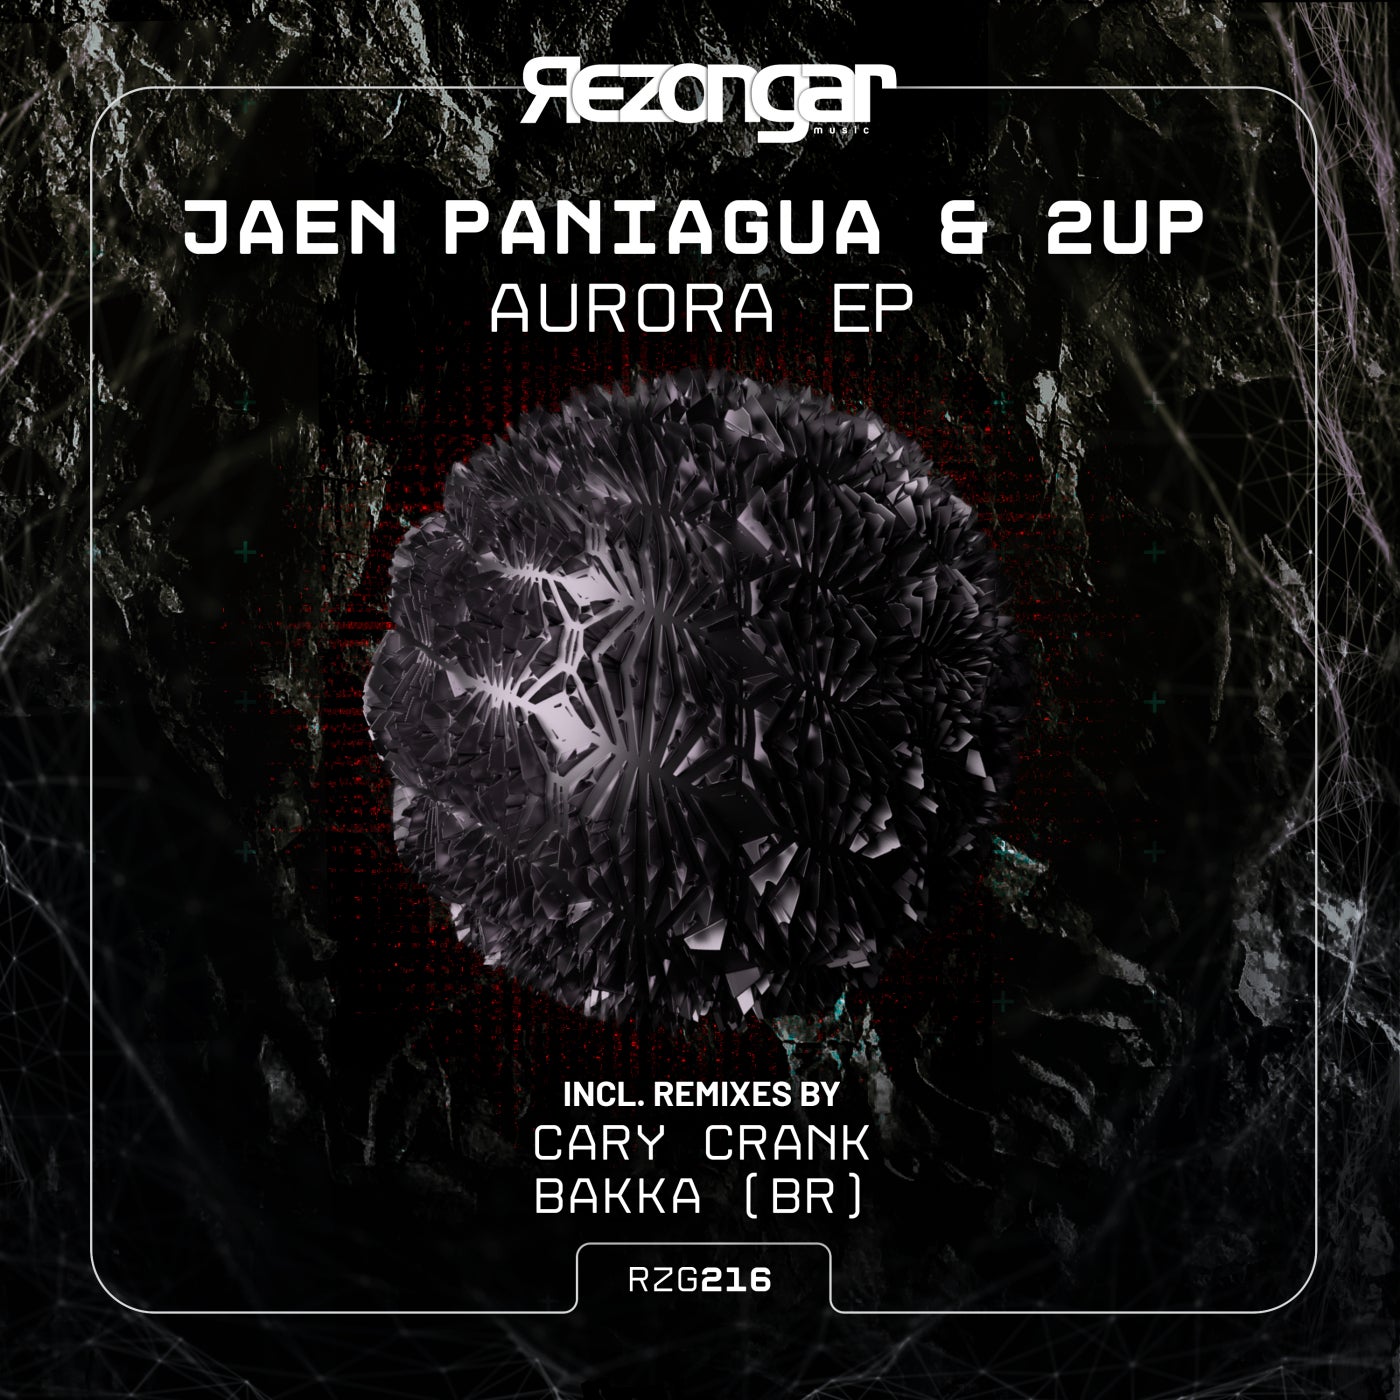 2up, Jaen Paniagua - Aurora [Rezongar Music] | Music & Downloads on ...